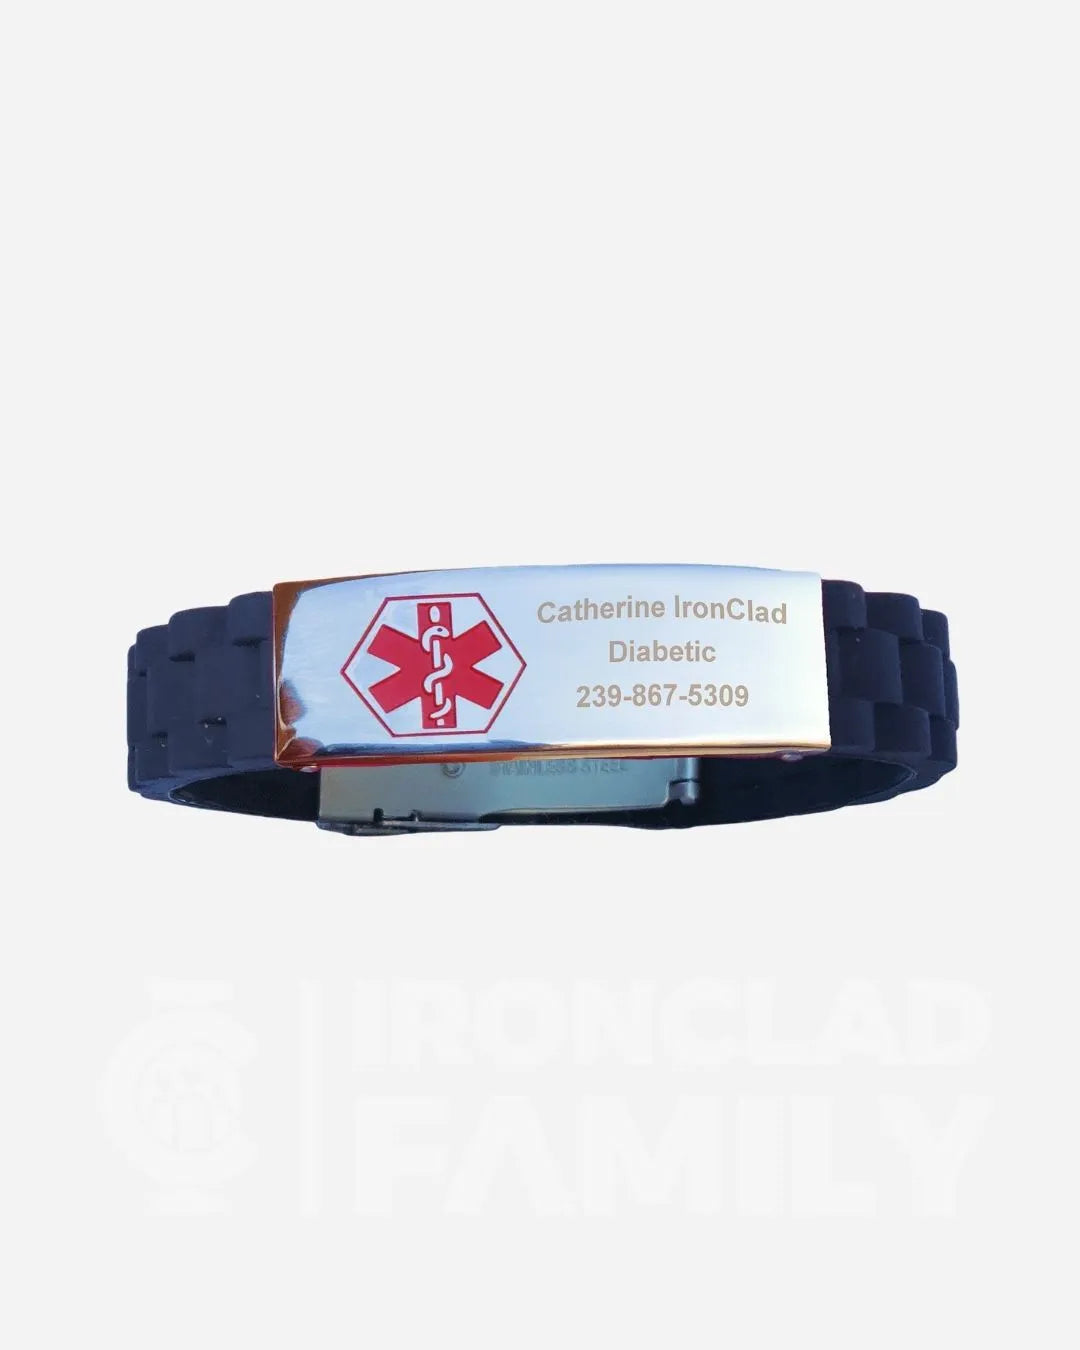 High-quality medical ID bracelet